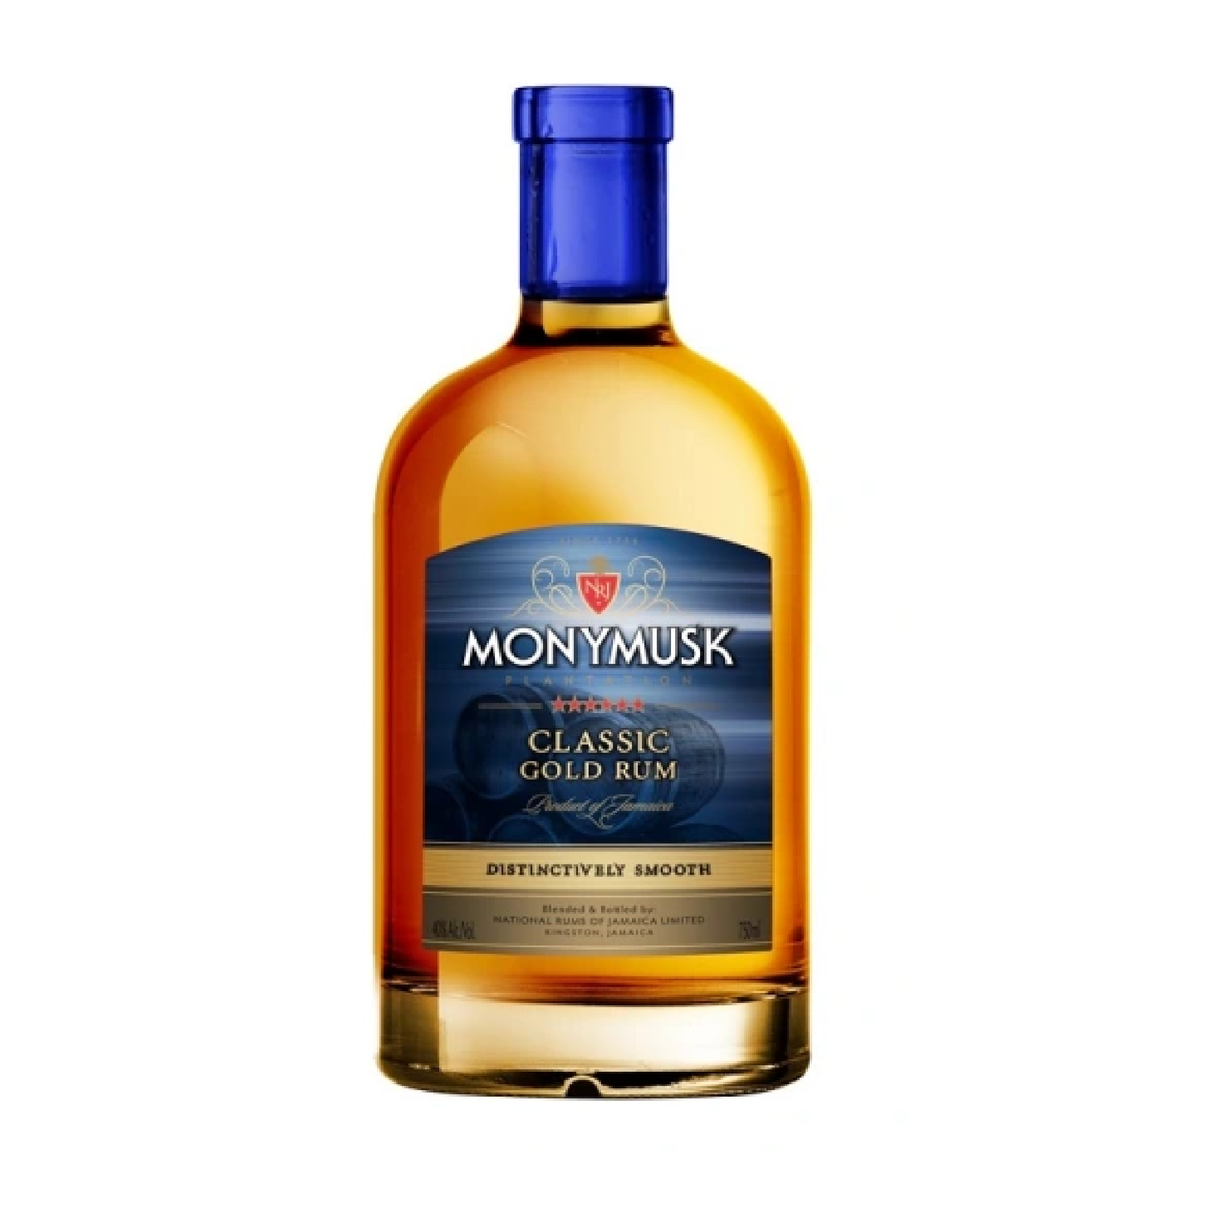 Monymusk Gold Rum Classic - Liquor Geeks